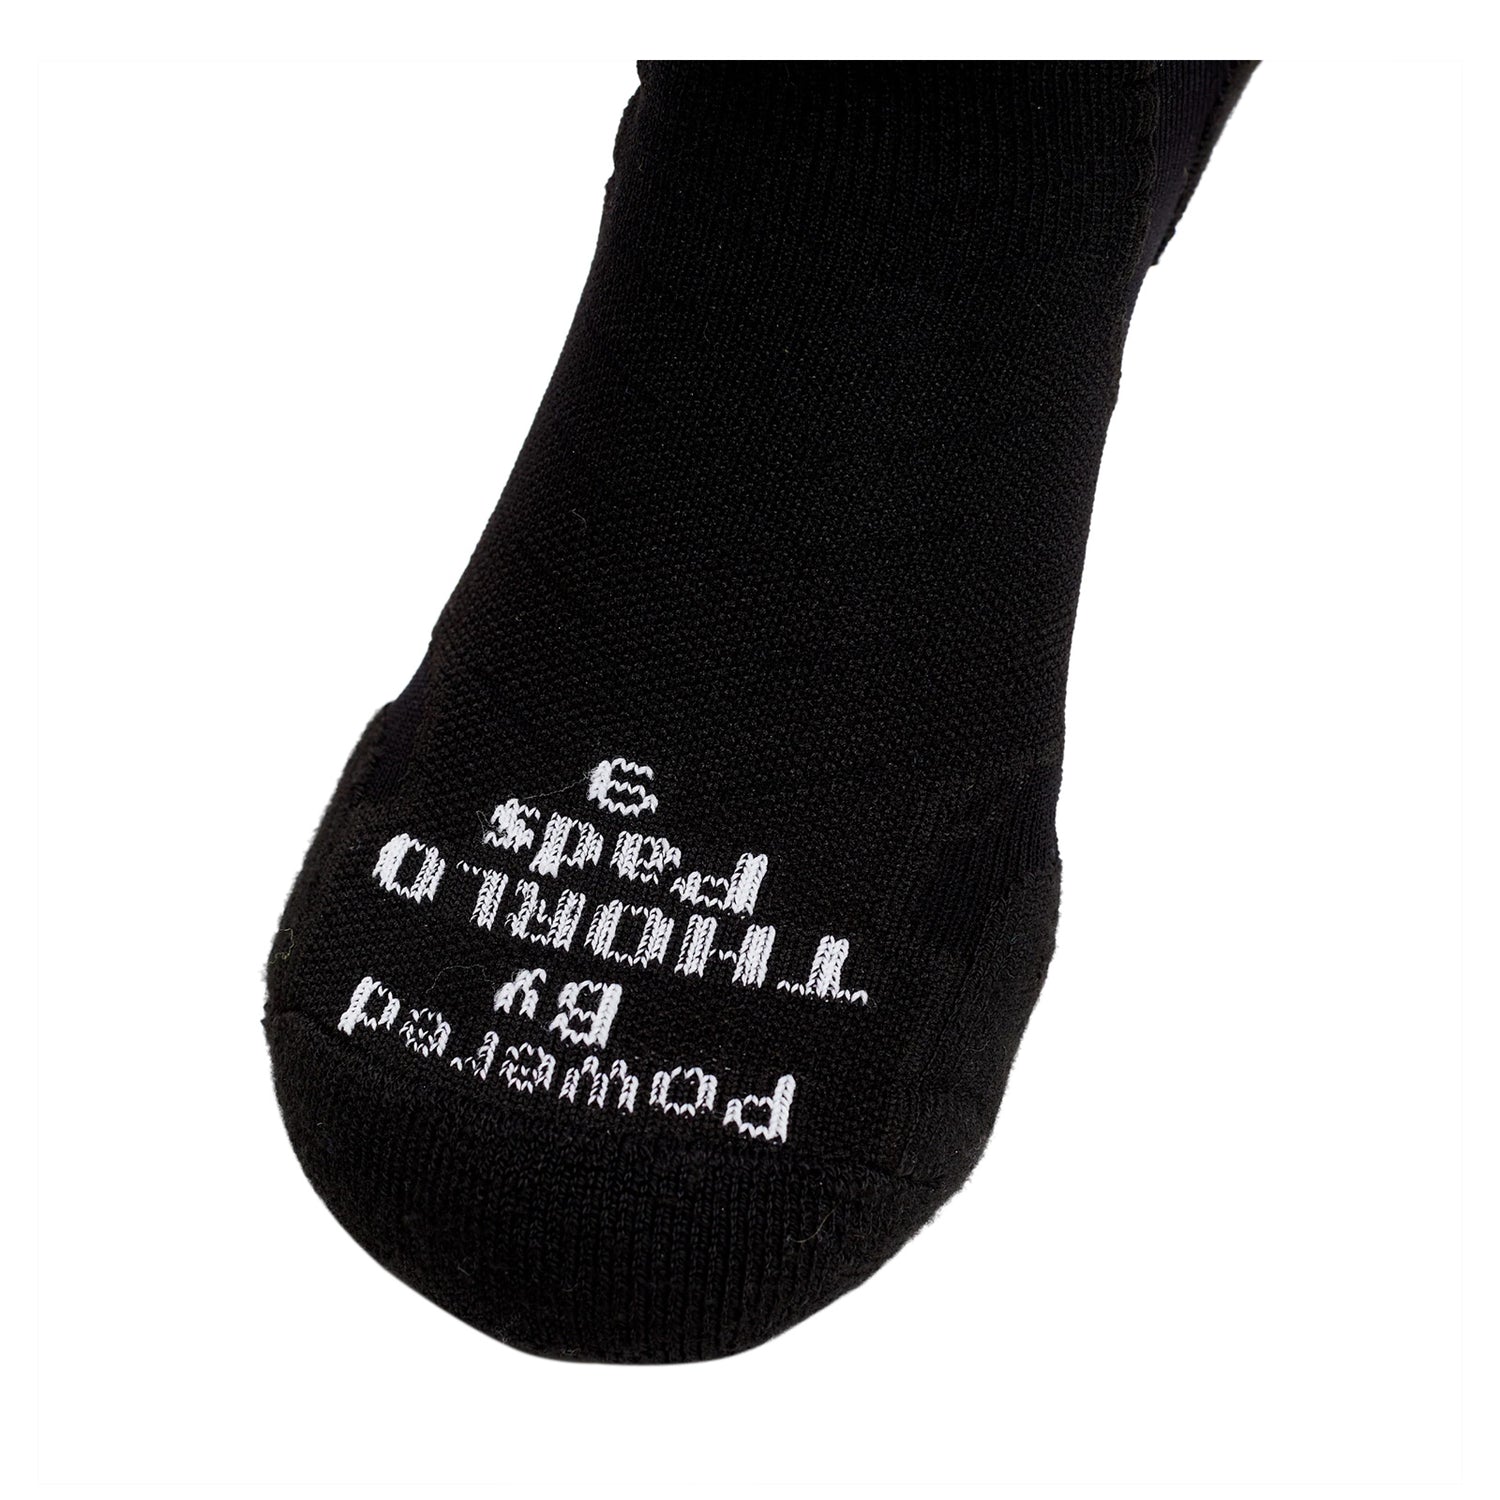 Peltz Shoes  Men's Thorlosocks Experia Micro Mini Socks - XL Black on Black XCCU-14 066